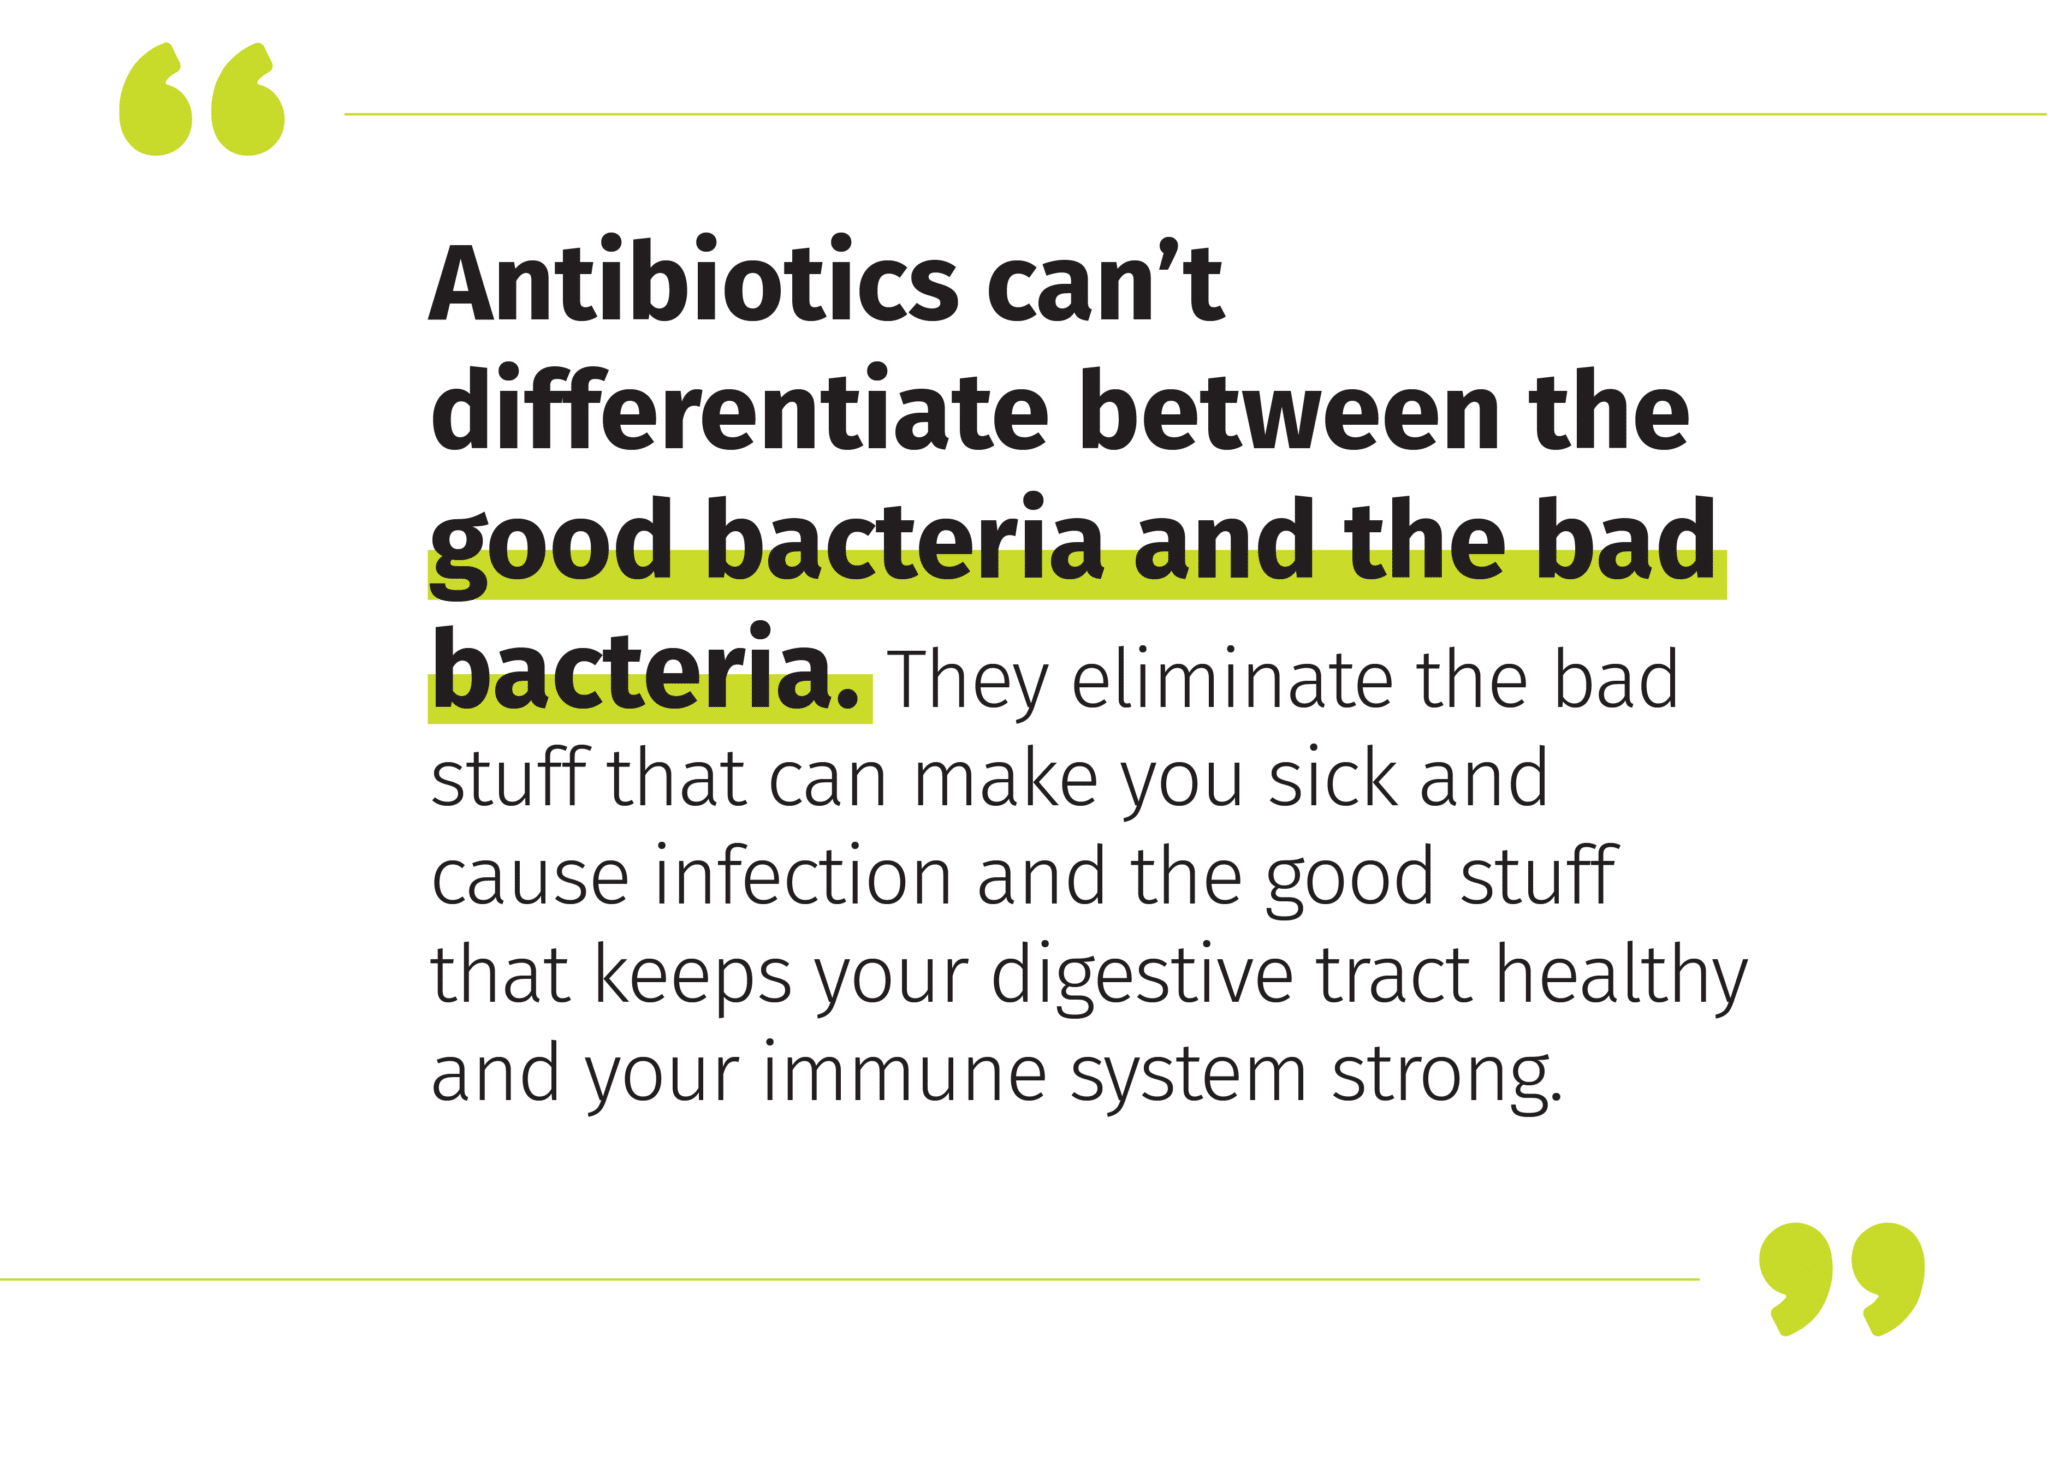 Probiotics After Antibiotics: How to Replenish Good Bacteria